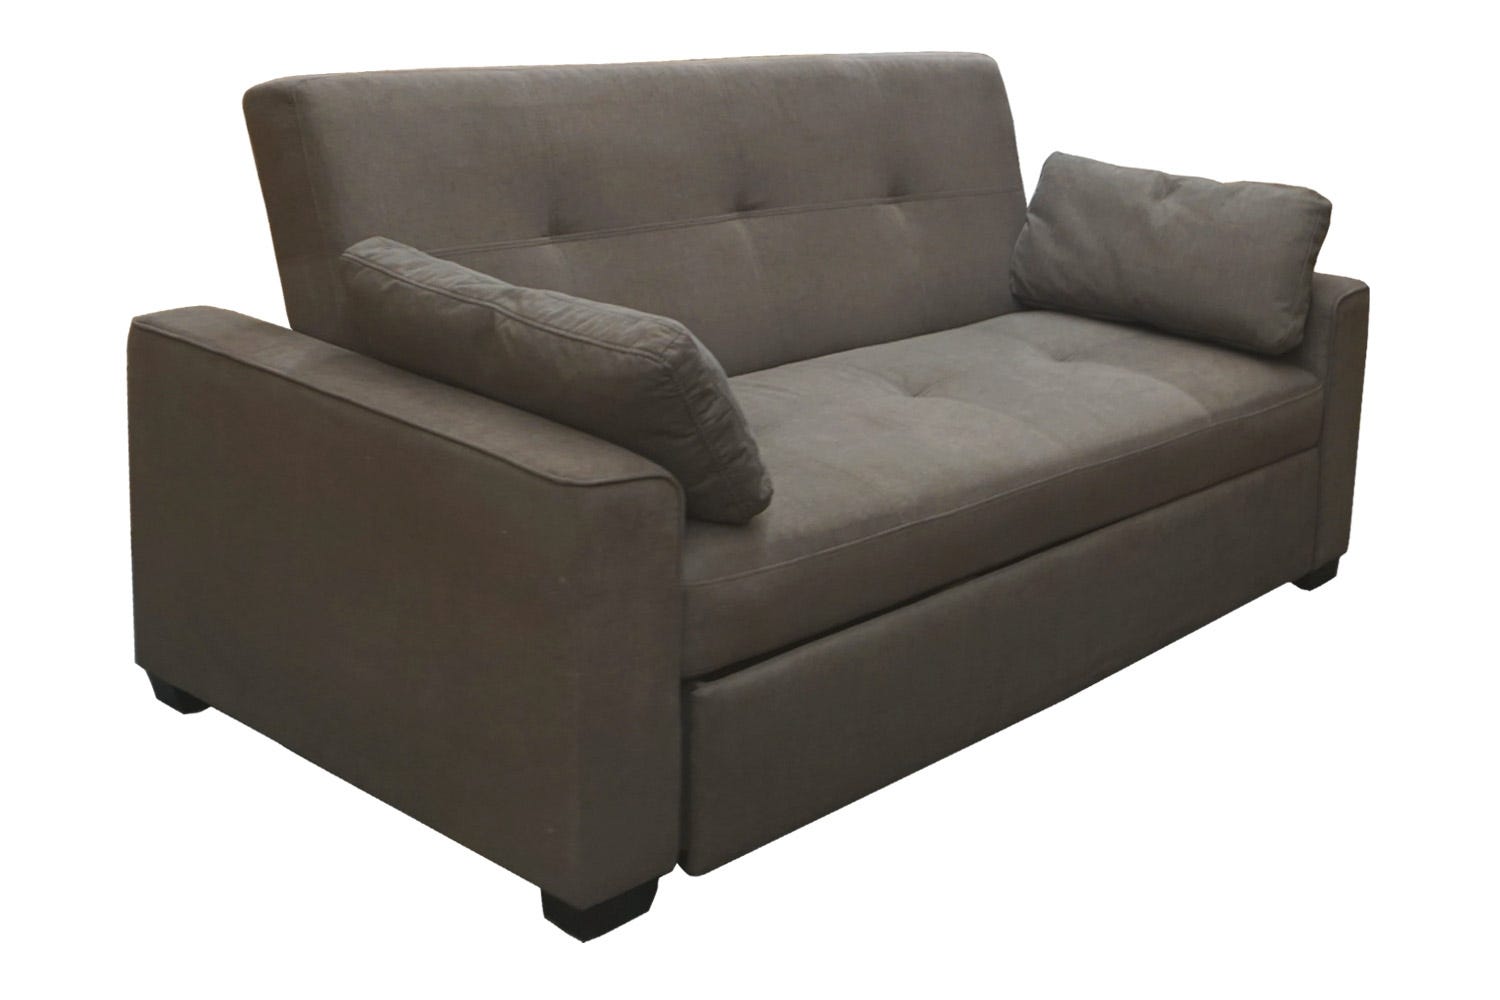 Eco-Sofa Upholstered Modern Non Toxic Sofa Bed